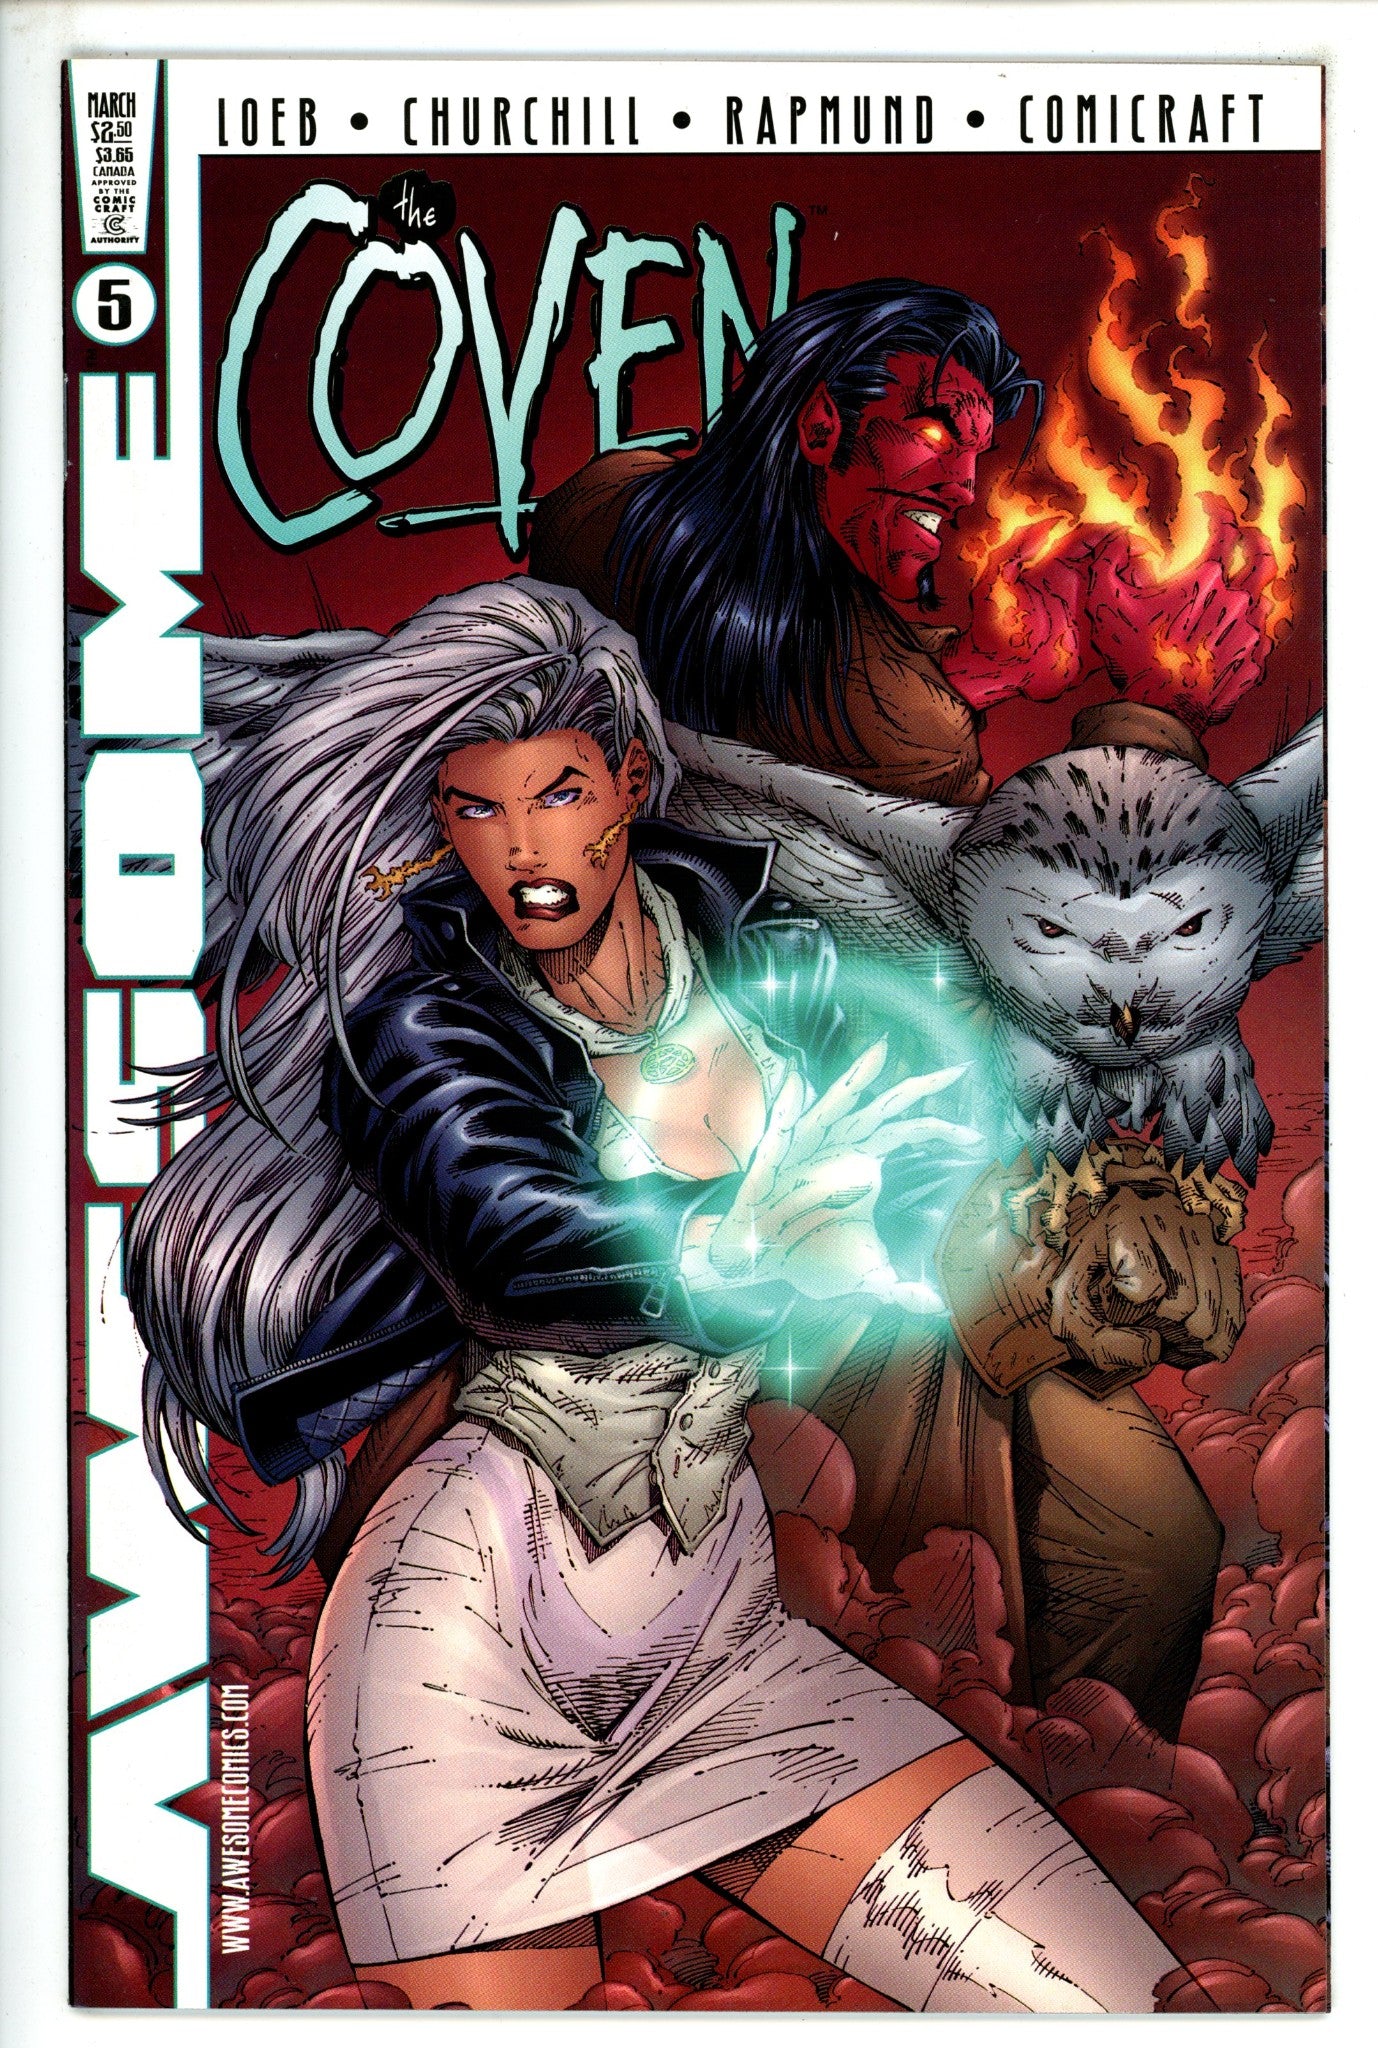 The Coven Vol 1 5 (1998)